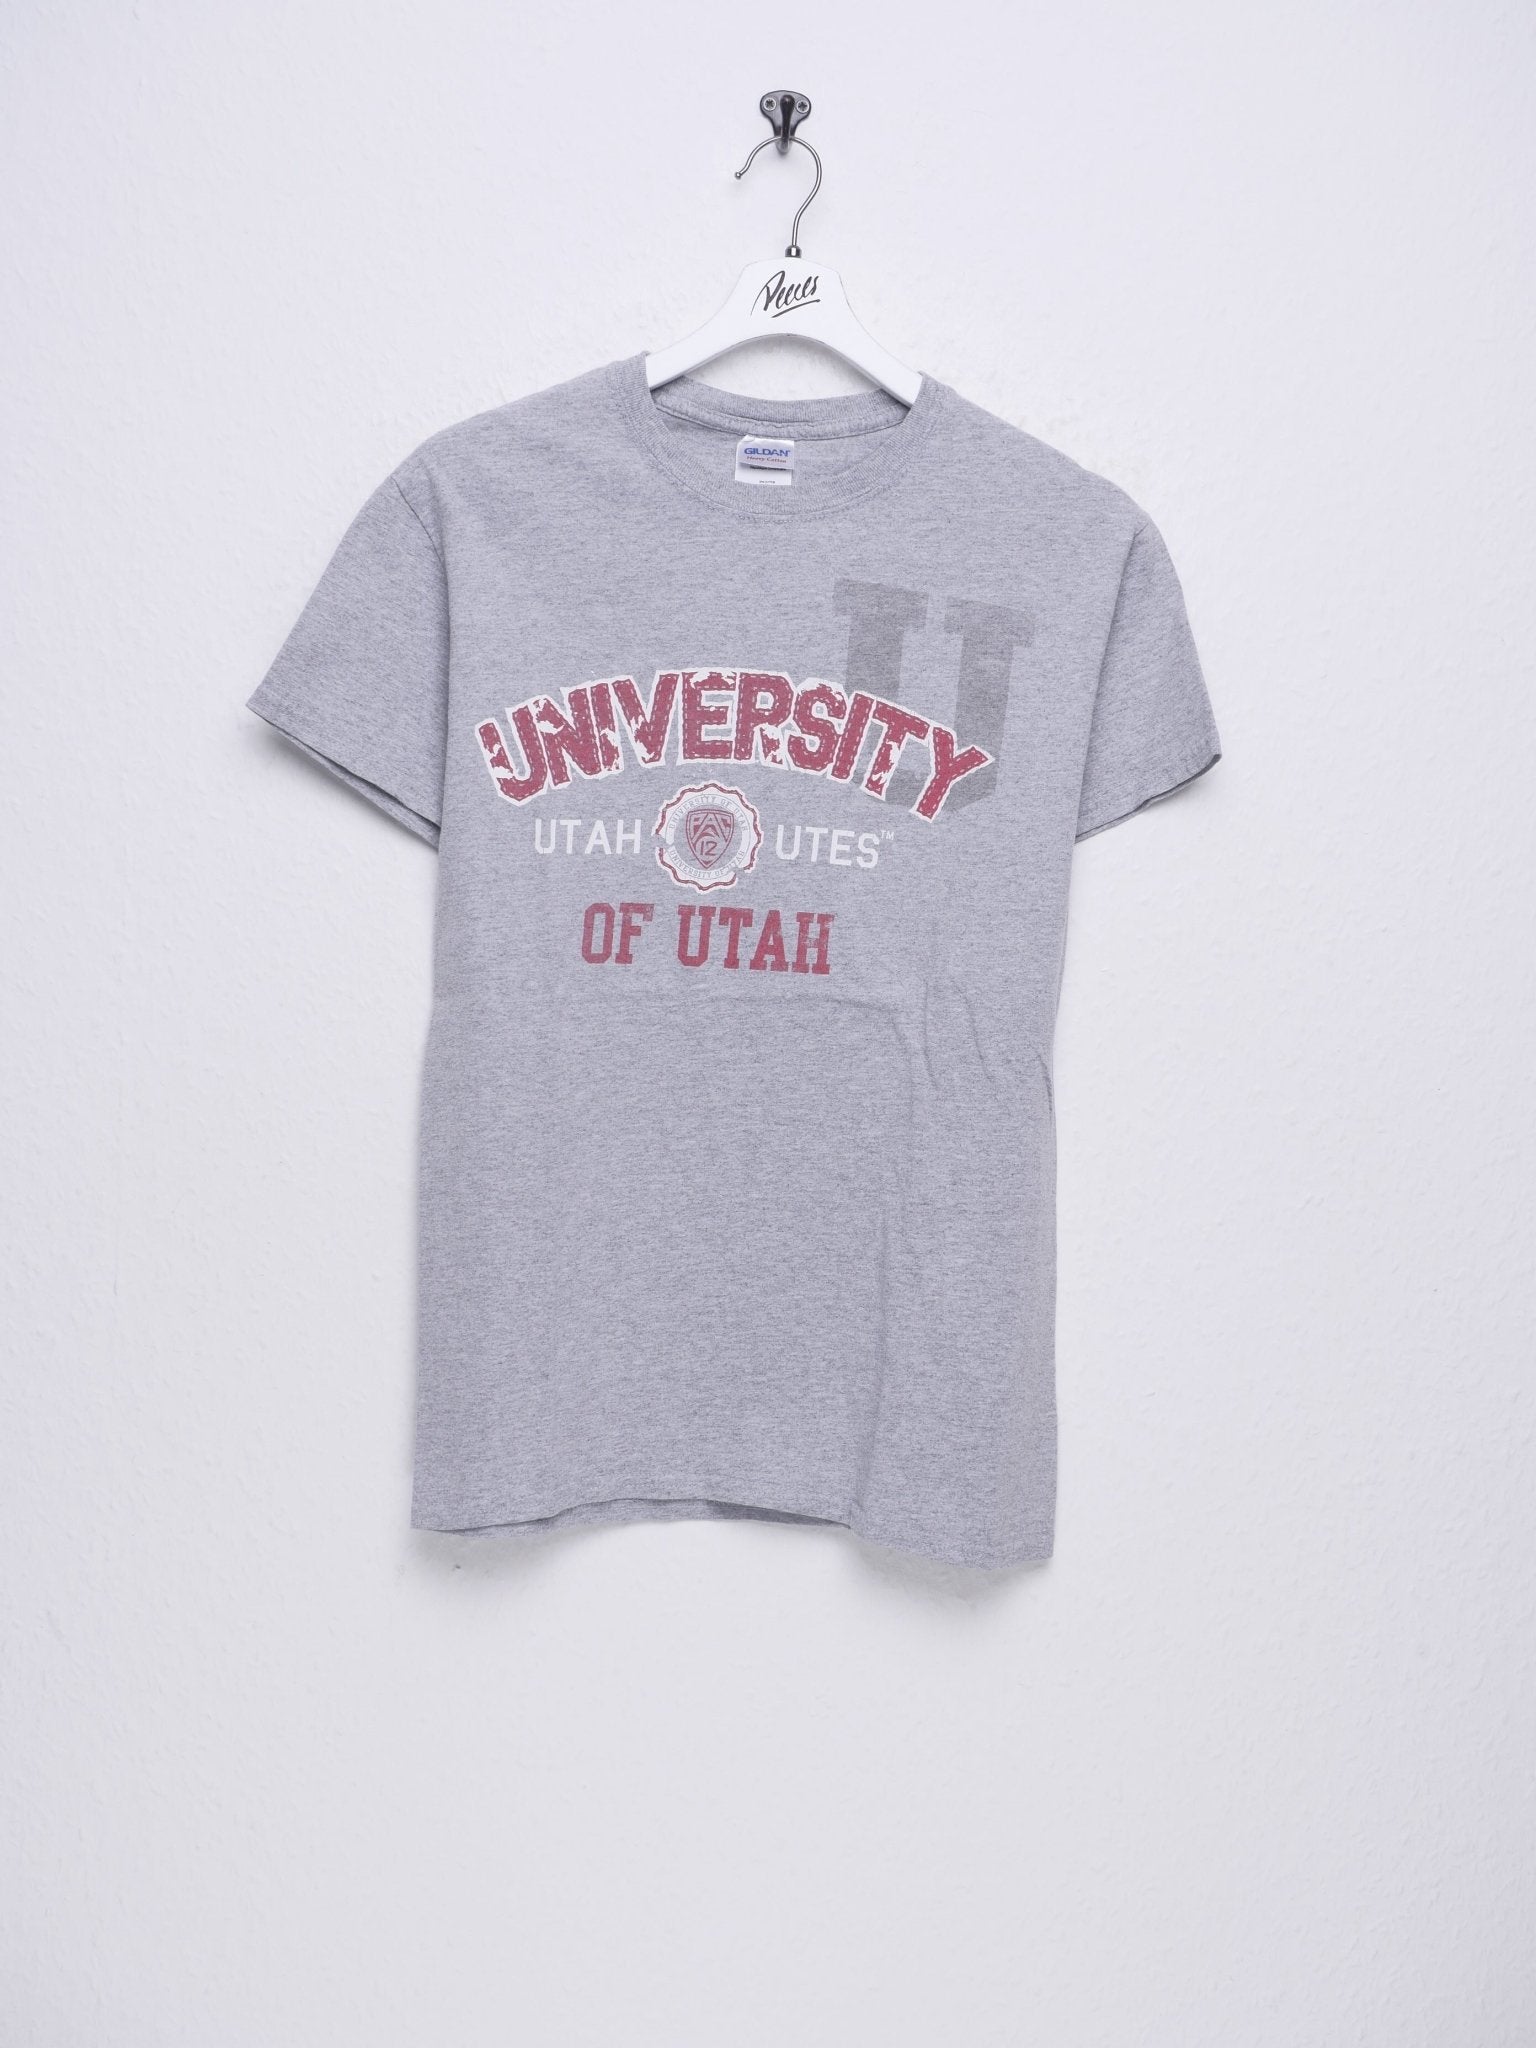 University of Utah printed Spellout Vintage Shirt - Peeces